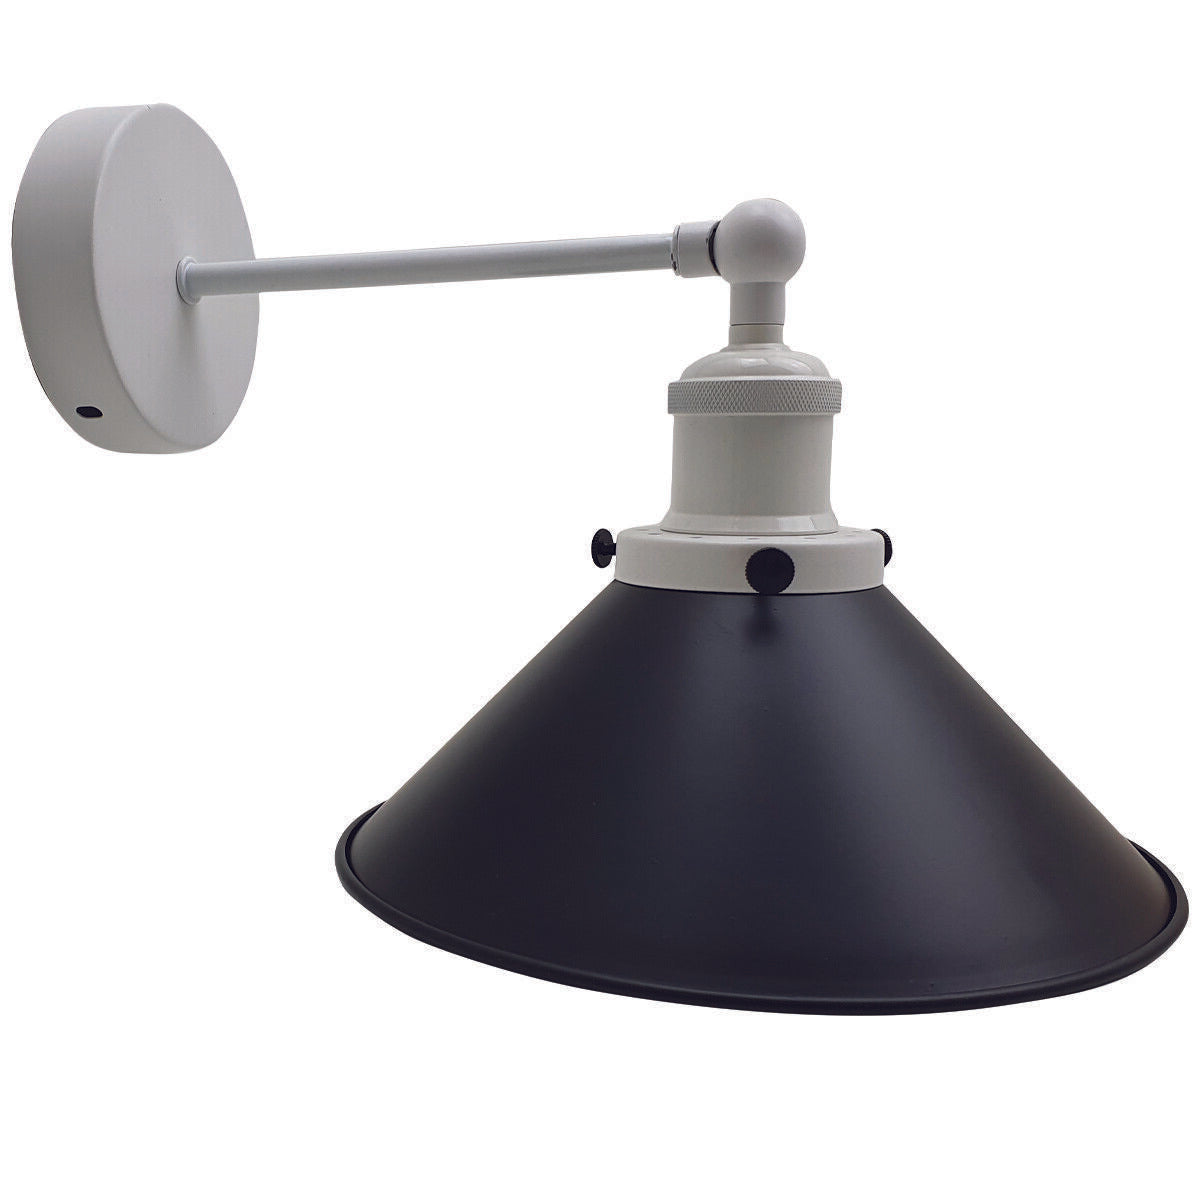 Industrial Retro Style Adjustable Wall Lights Sconce Lamp Fitting Kit~2564 - LEDSone UK Ltd